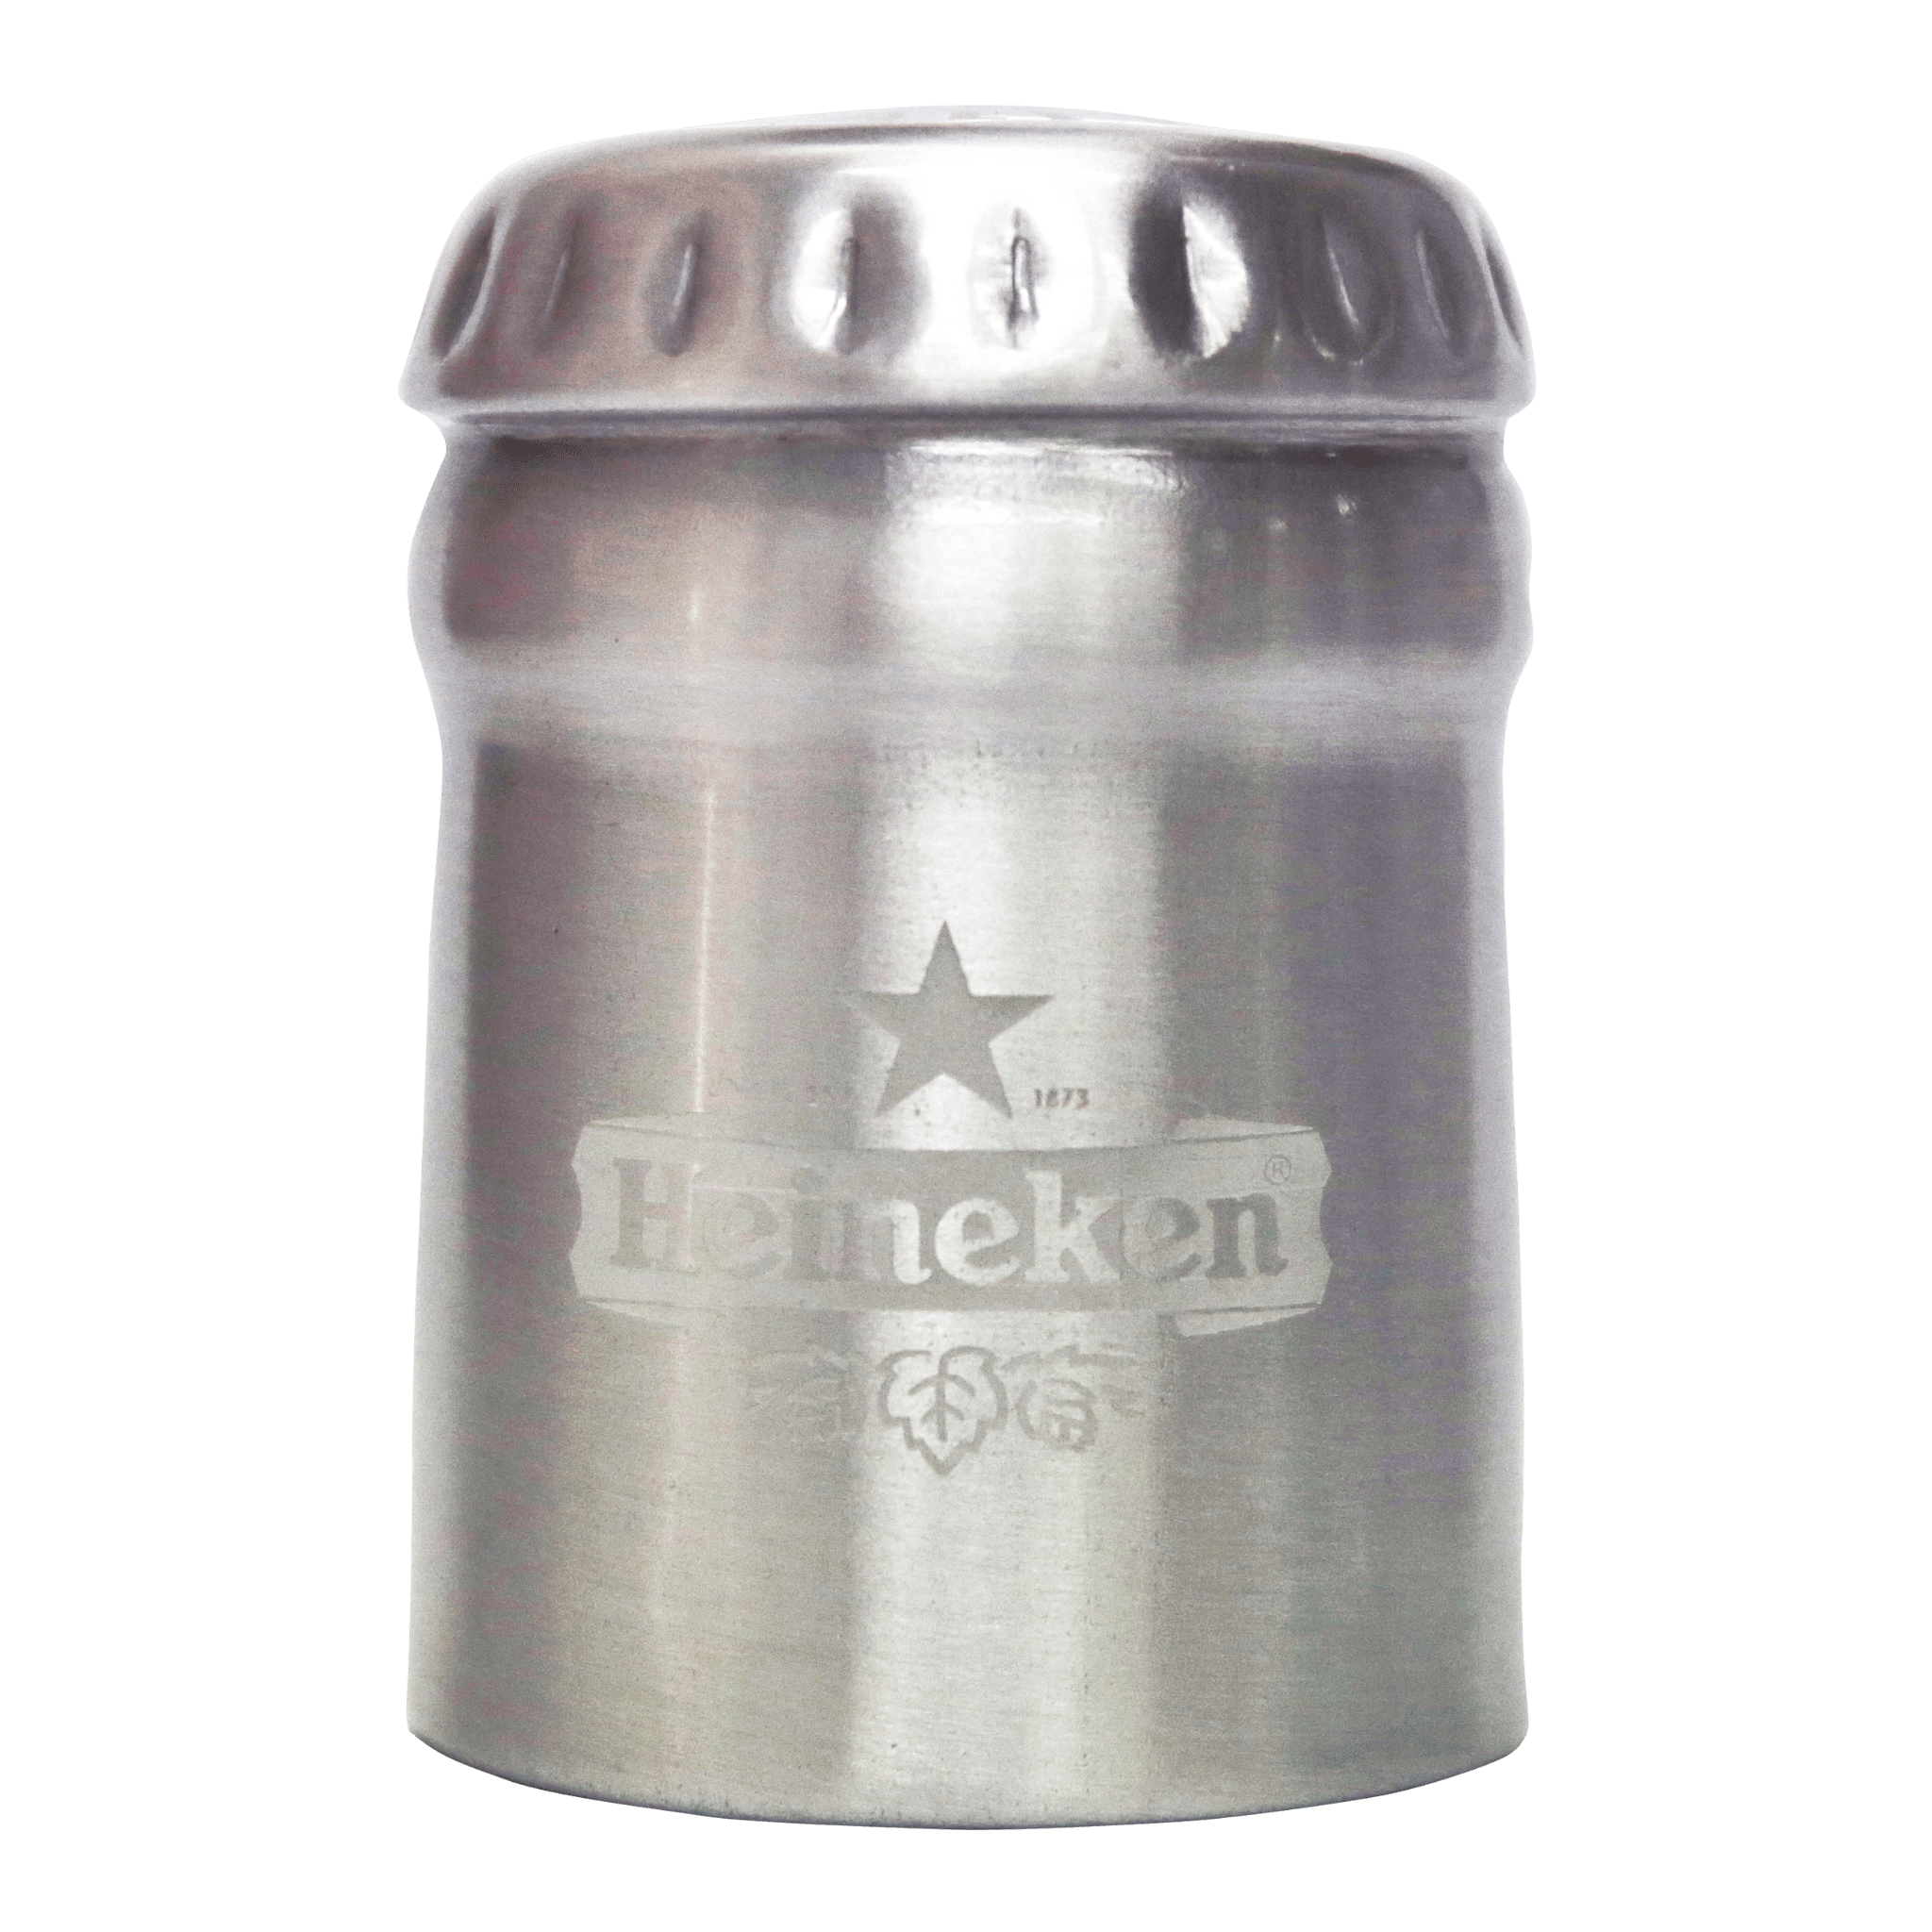 Buy (1) Heineken 330ml 6 Pack, get (1) Heineken Click Bottle Opener (Freebie)